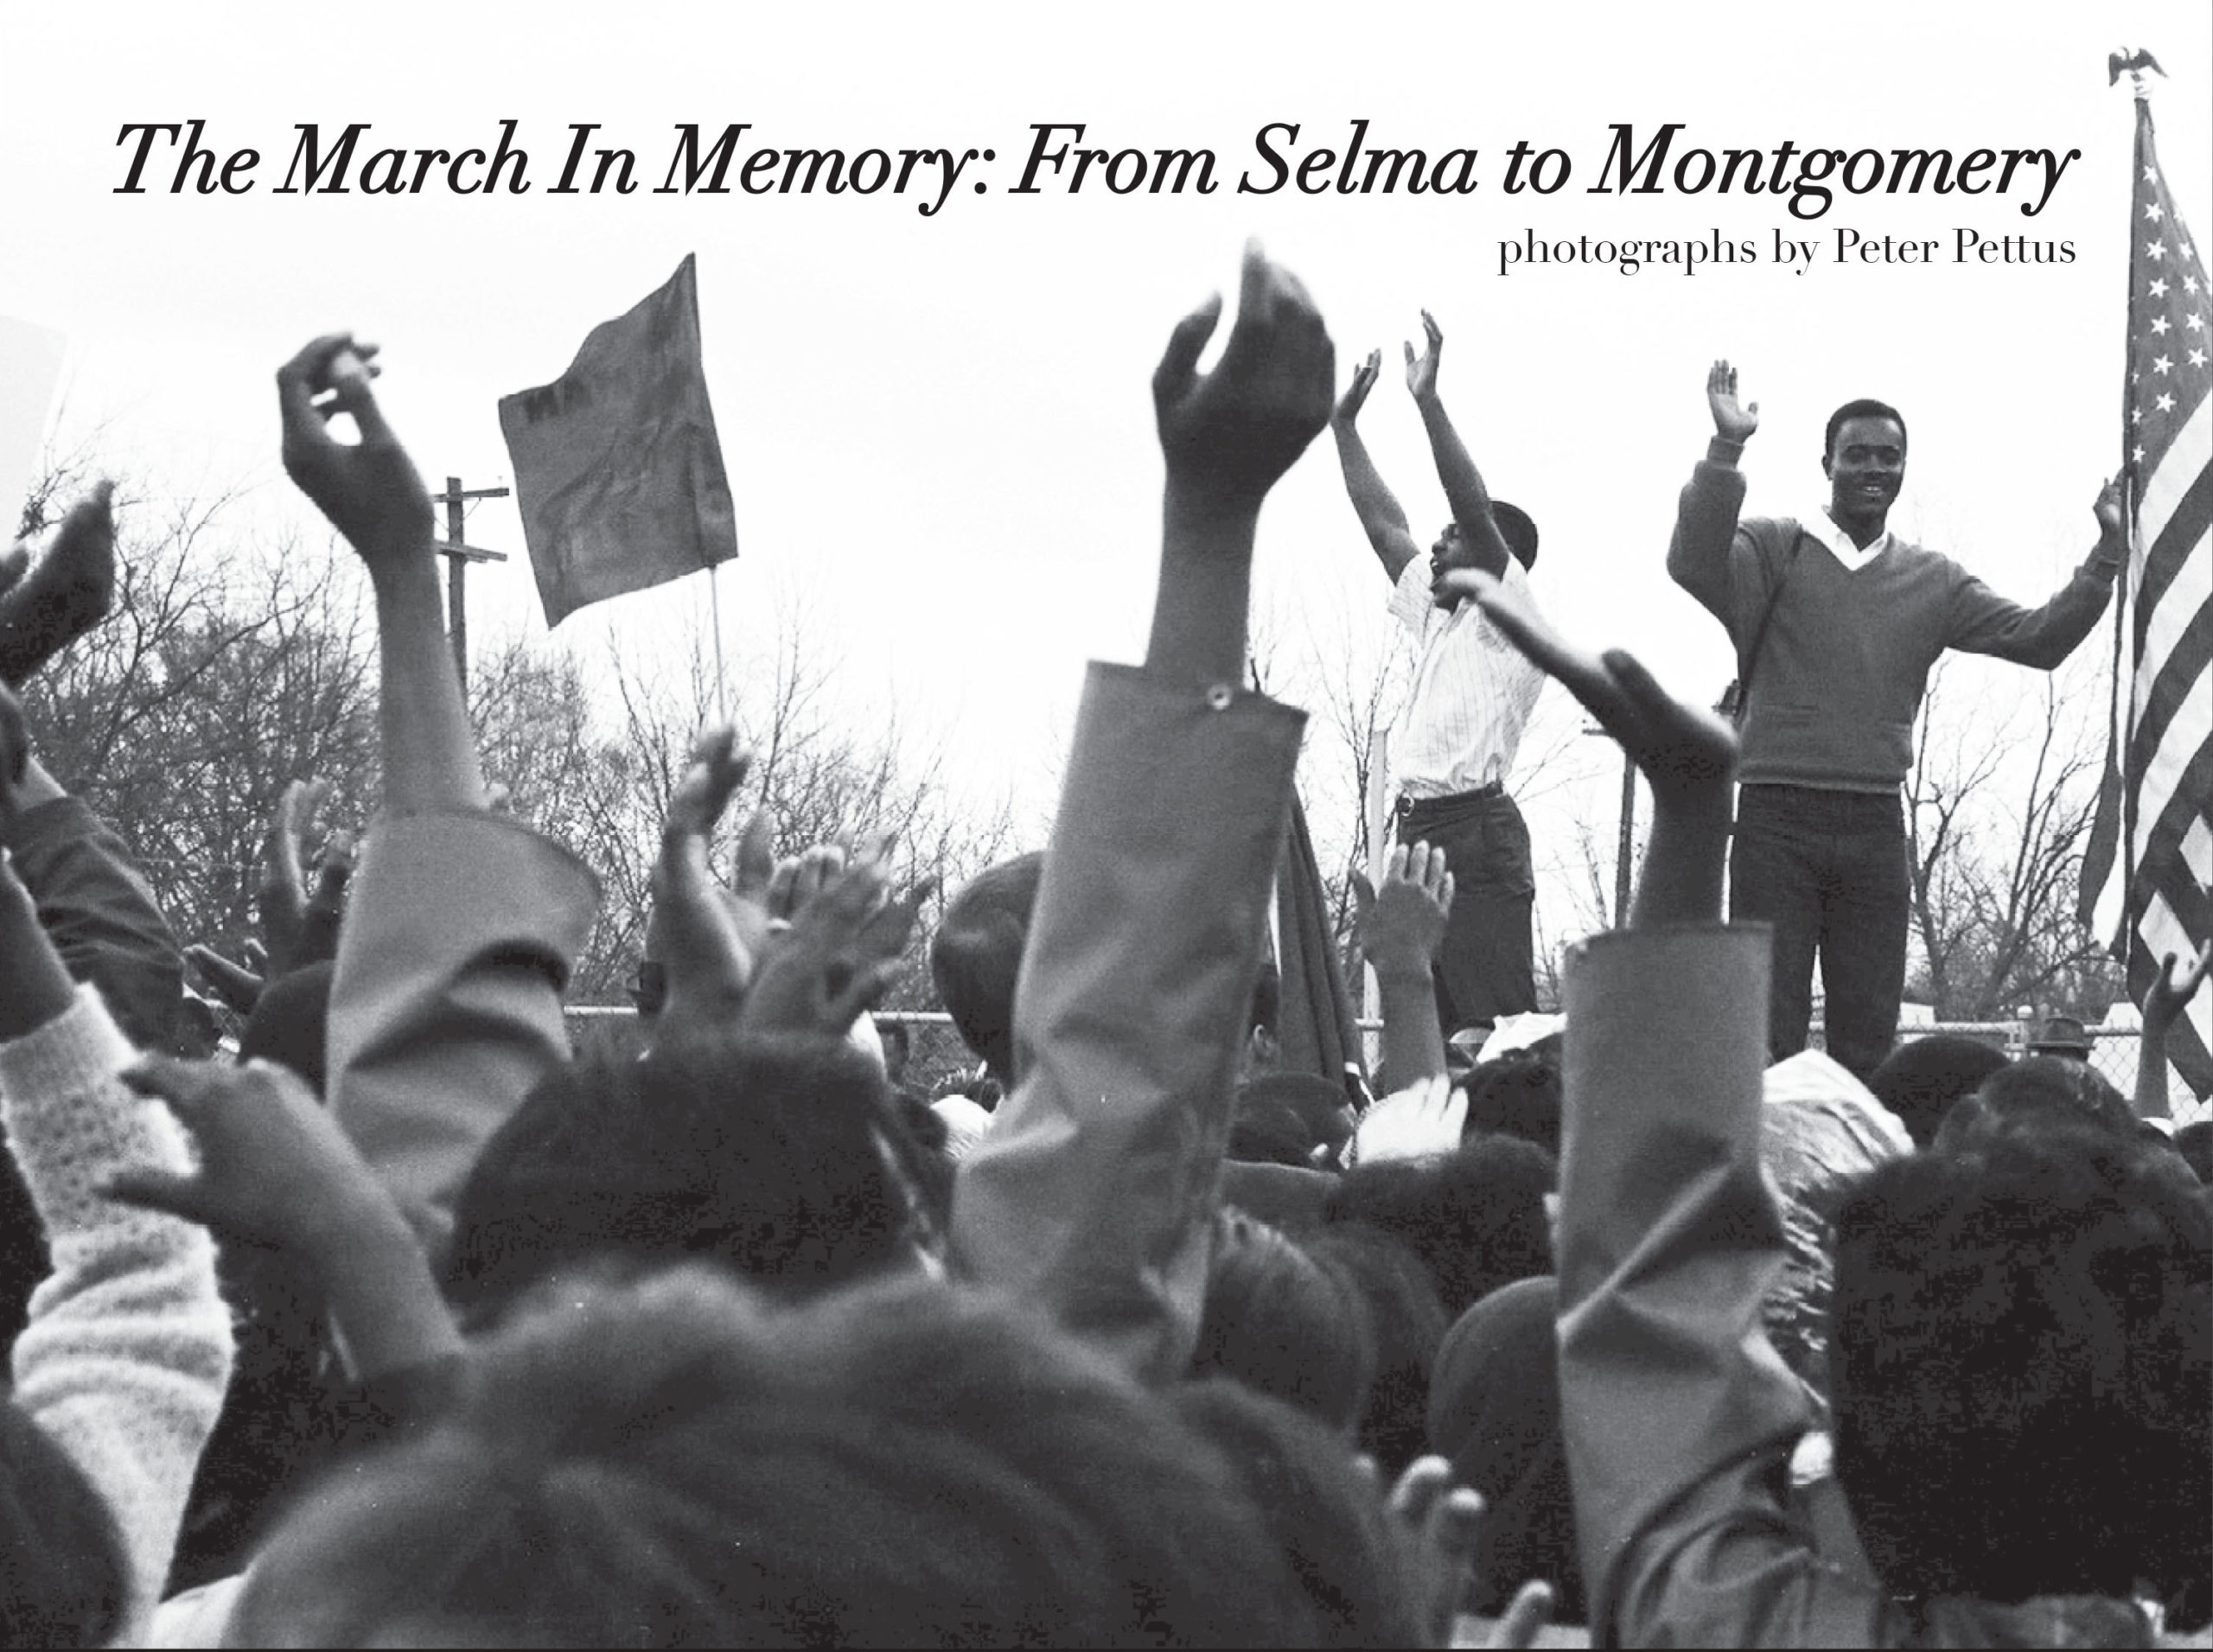 Peter Pettus & James Panero discuss “From Selma to Montgomery”